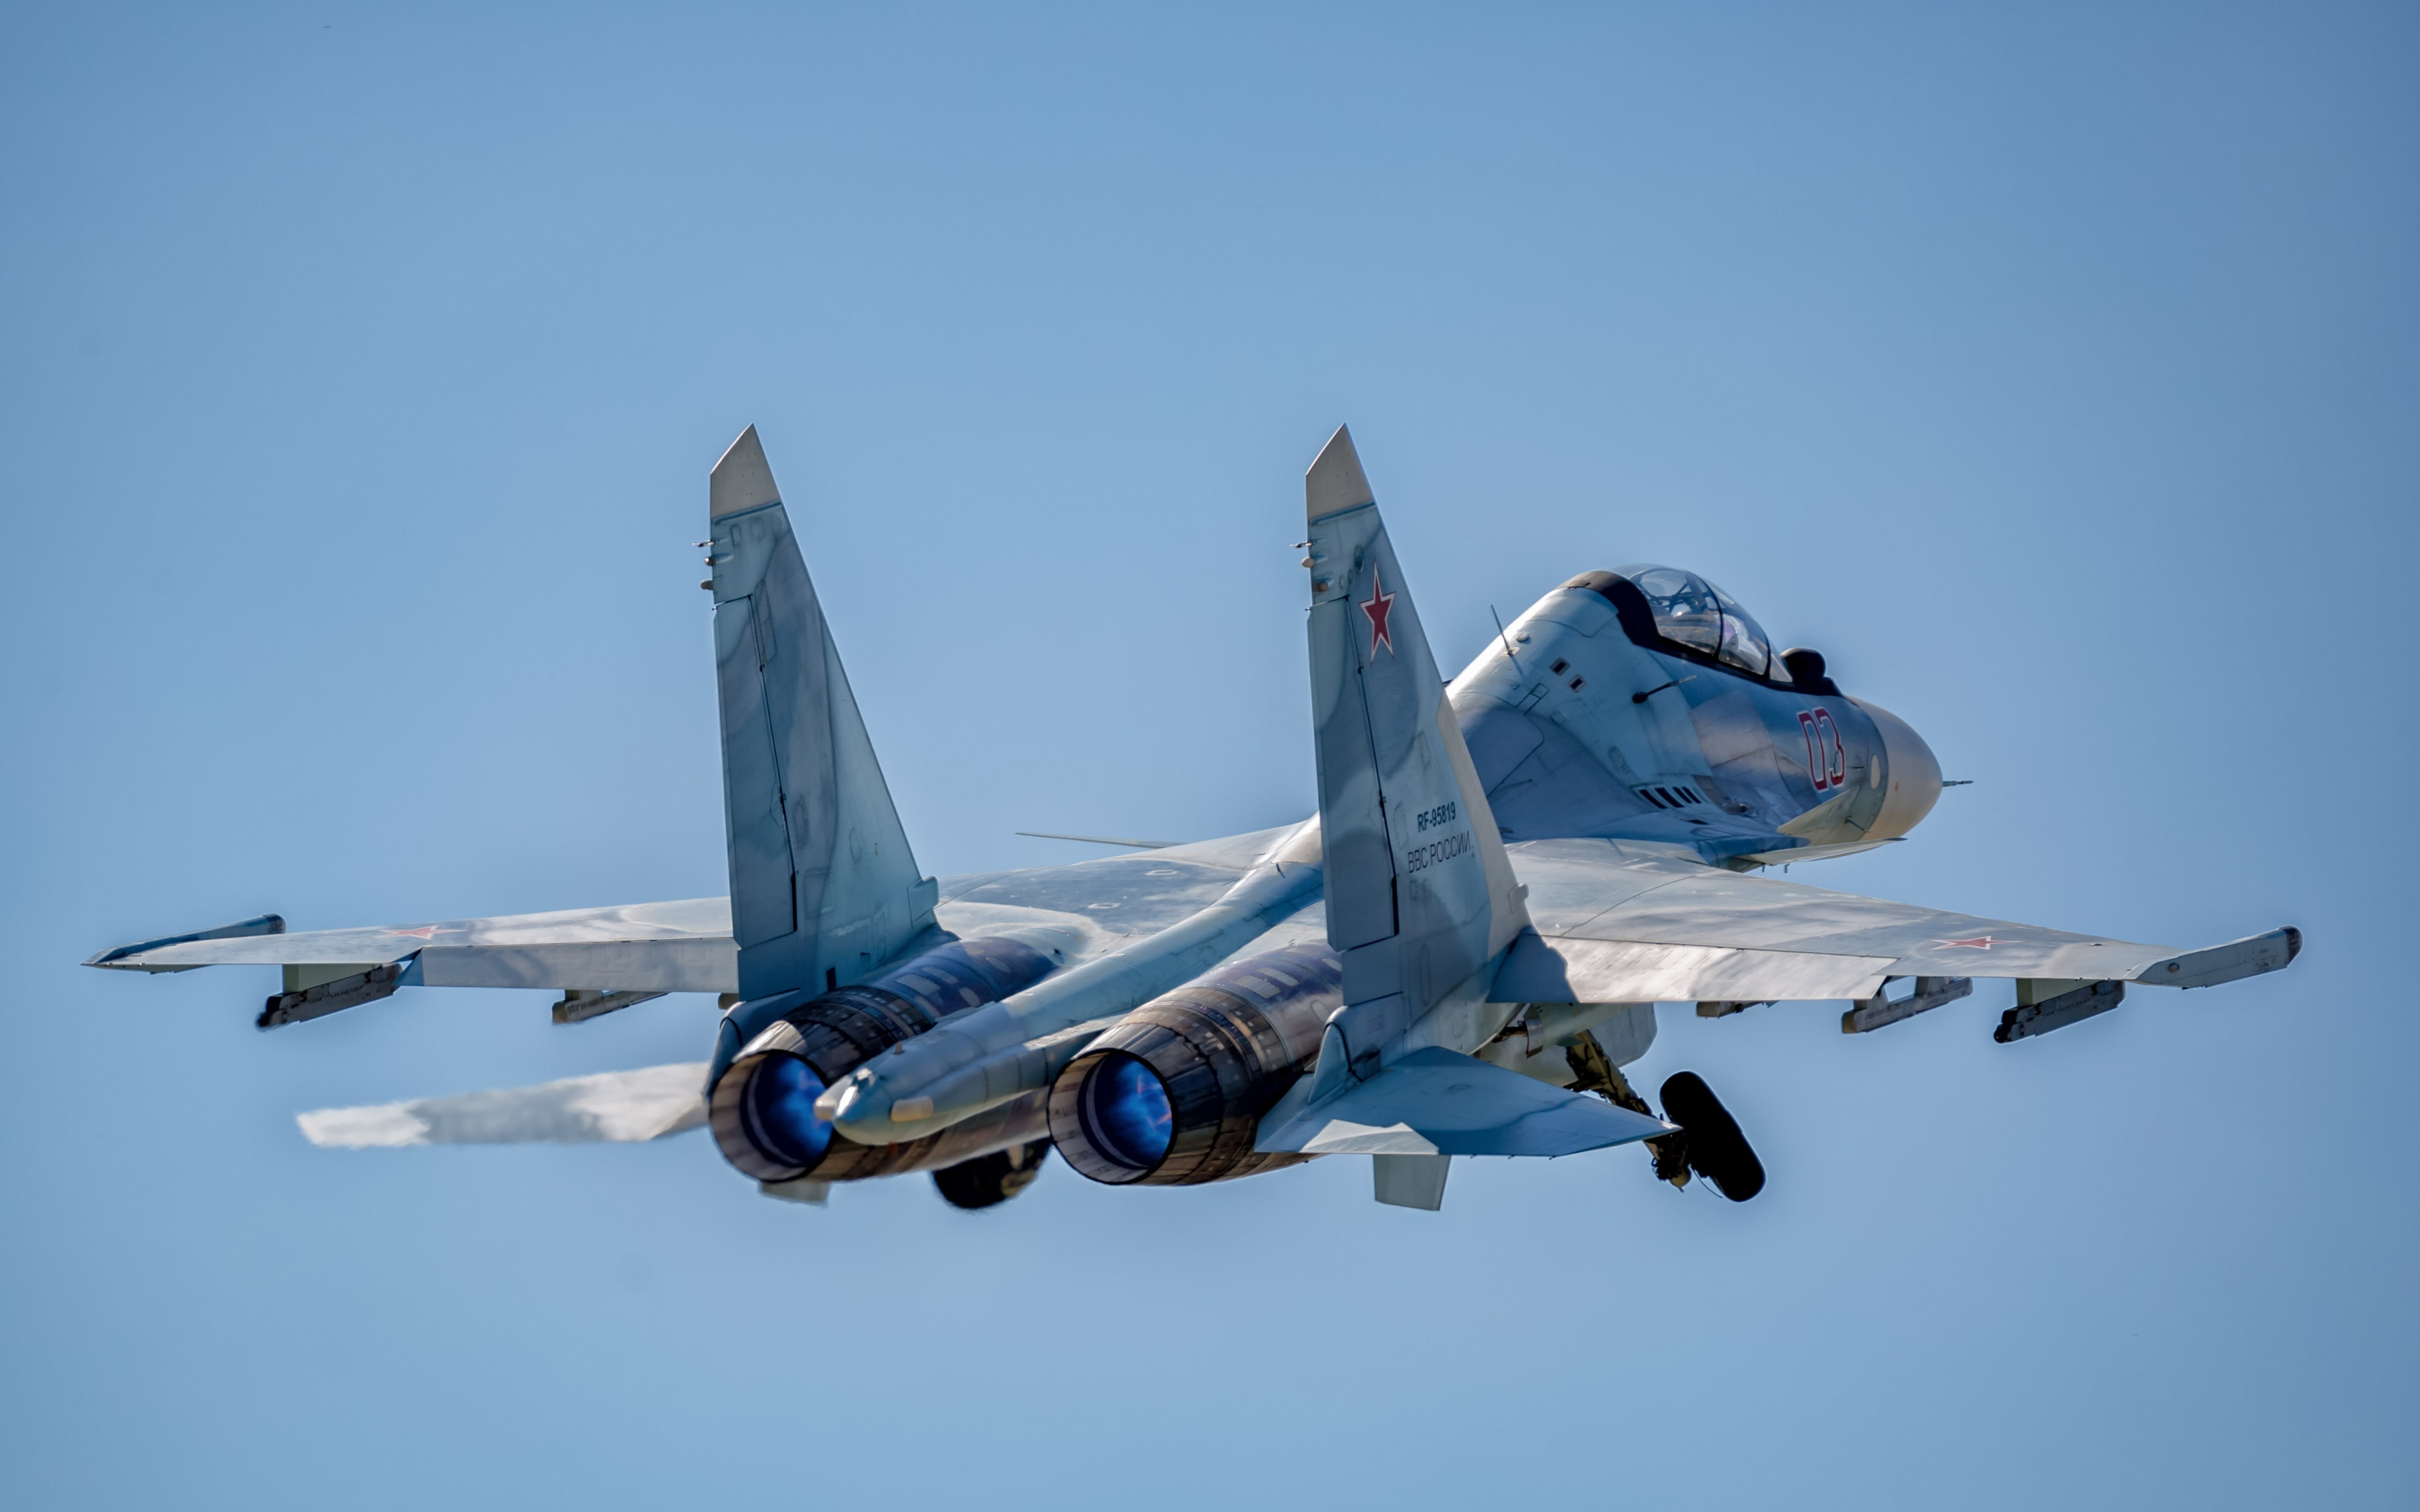 Download 3840x2400 wallpaper military, sky, sukhoi su- aircraft